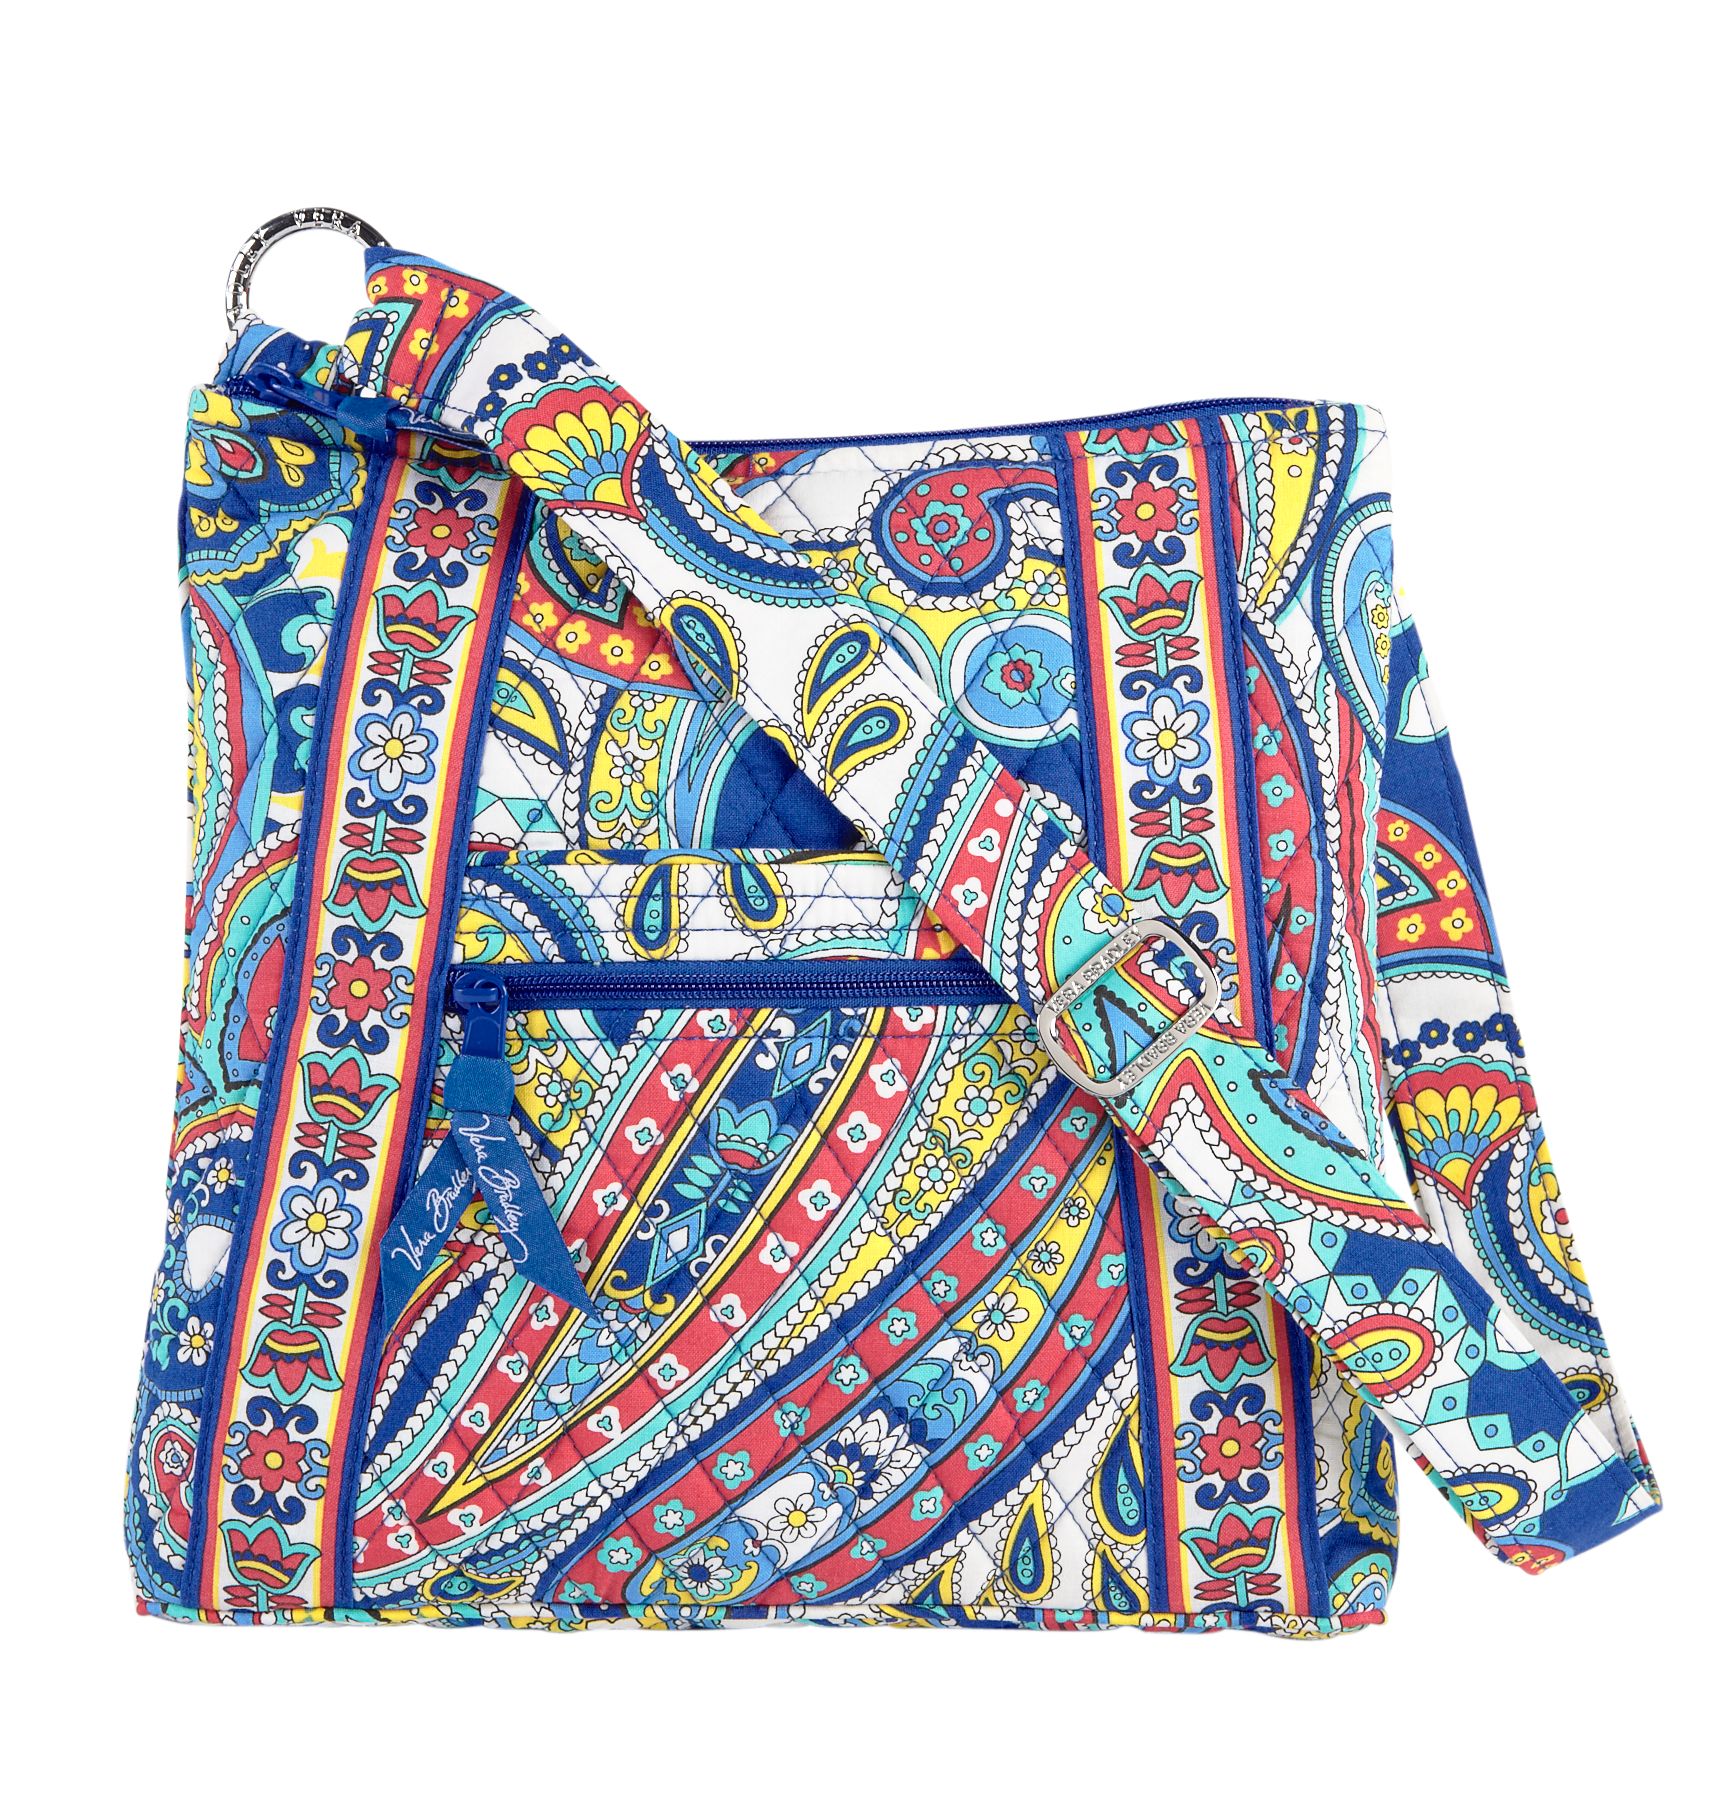 Vera Bradley Hipster Crossbody Bag | eBay